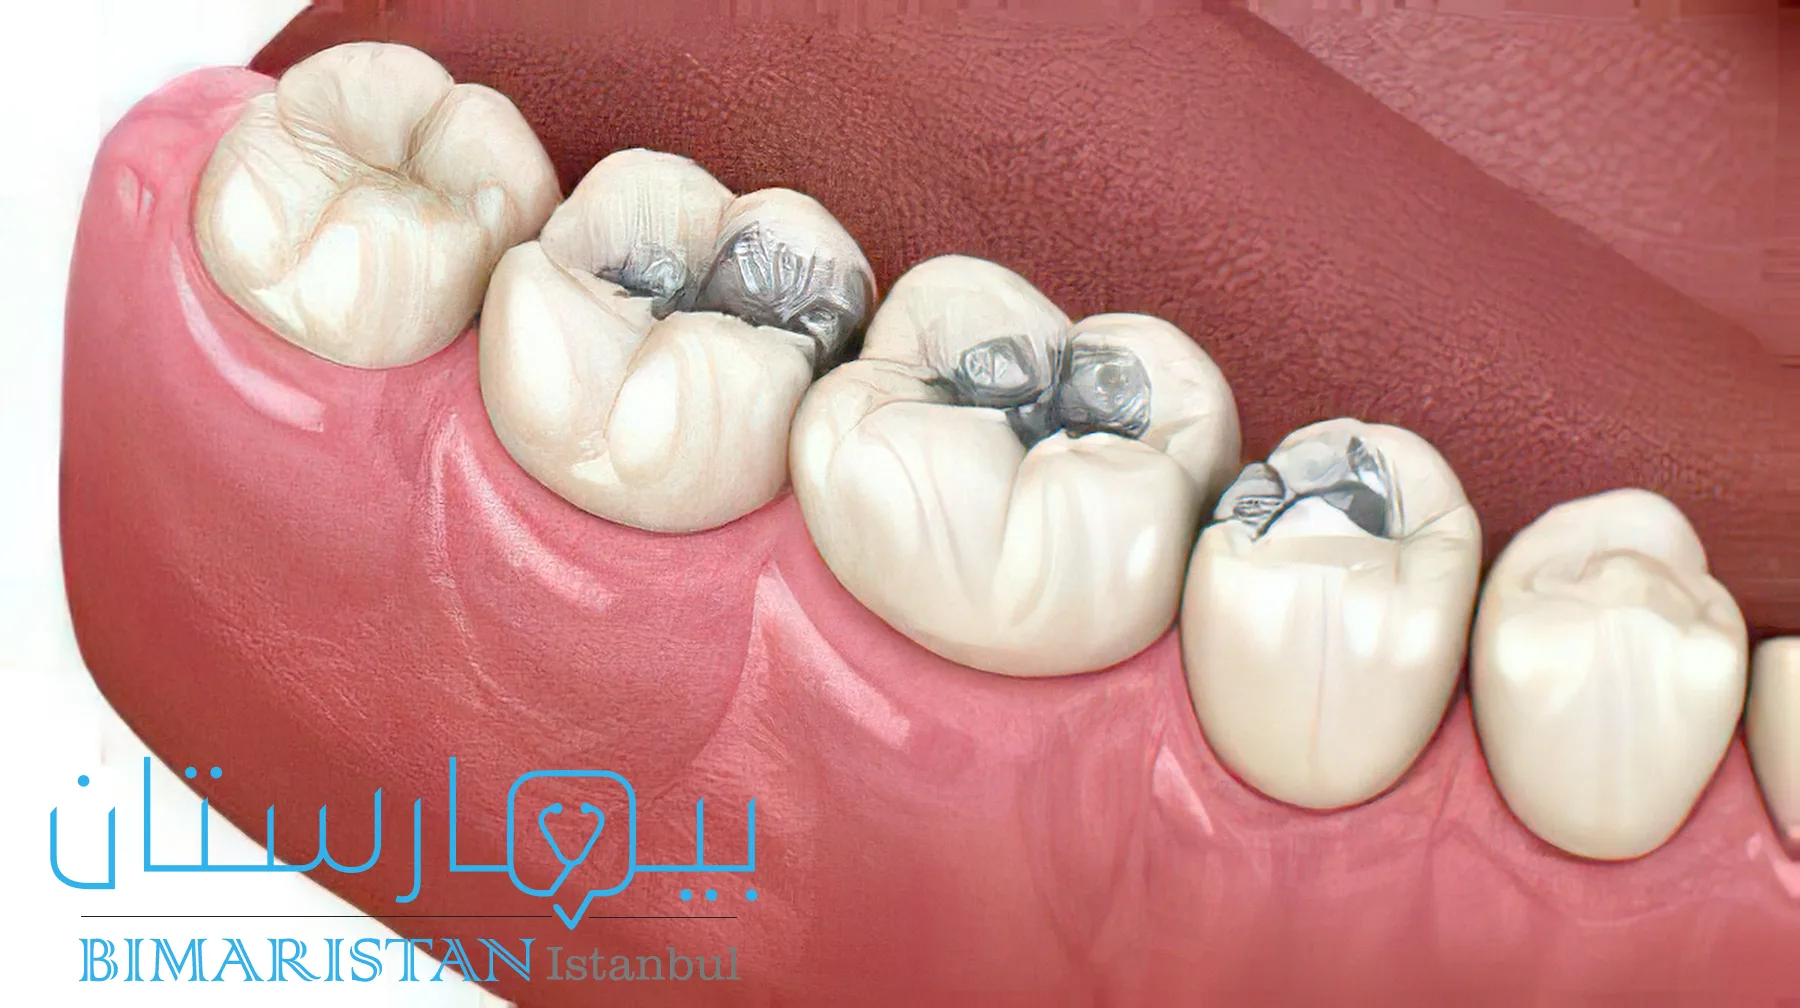 Dental caries treatment using fillings in Istanbul